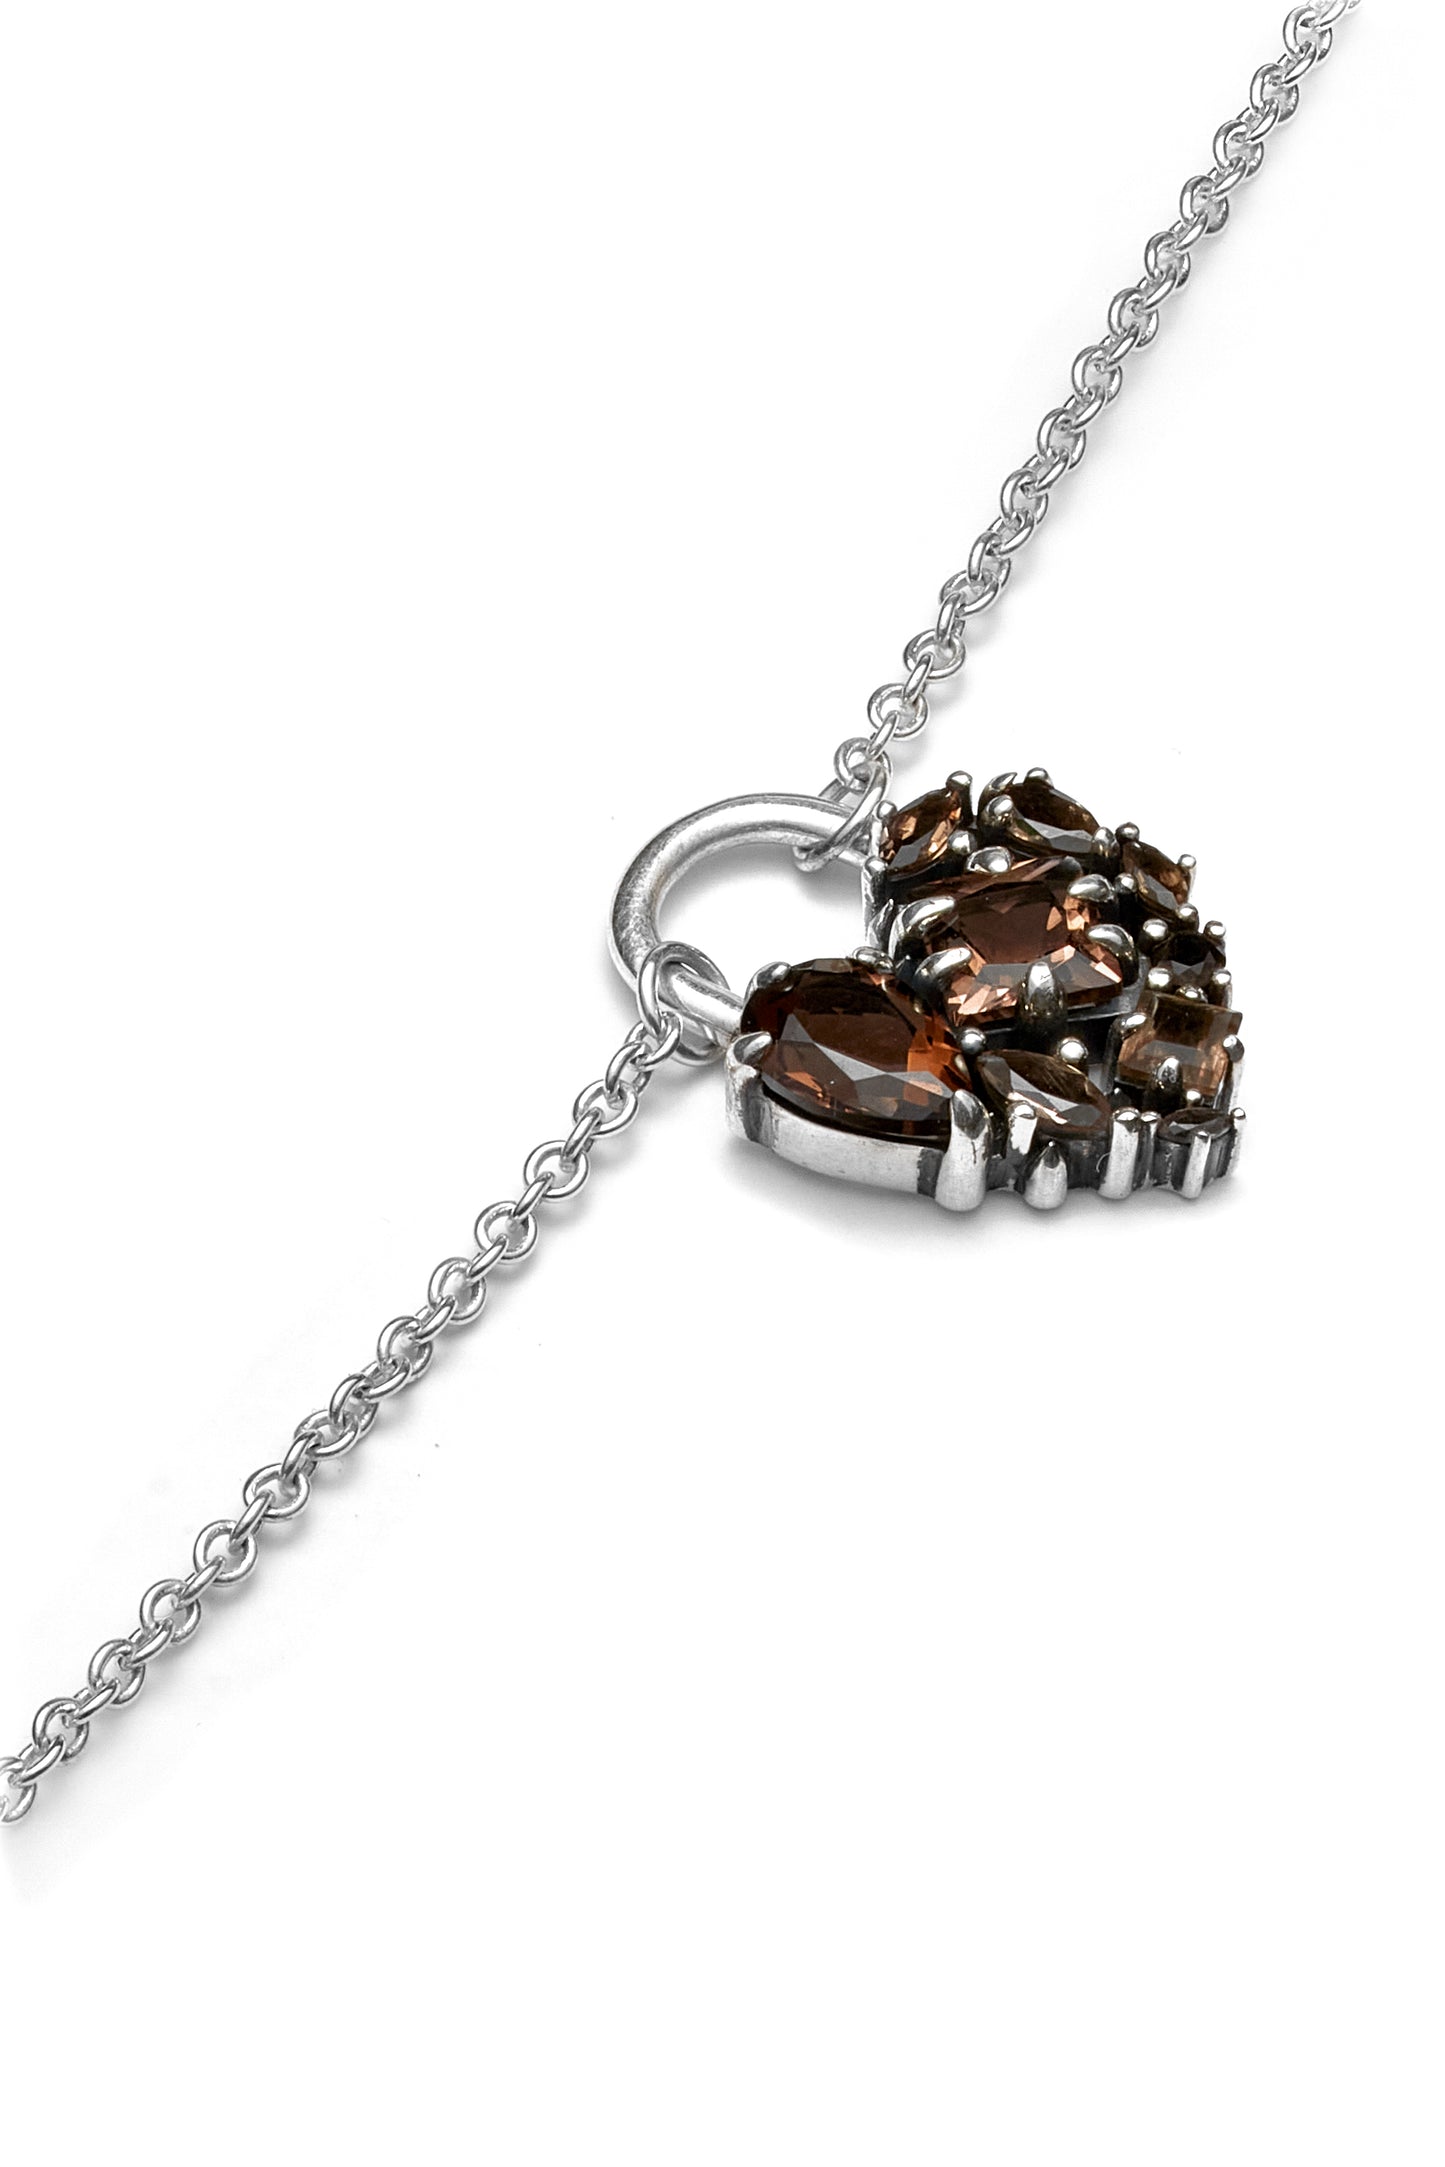 Crooked Heart Necklace By Stolen Girlfriends Club - Cola Quartz